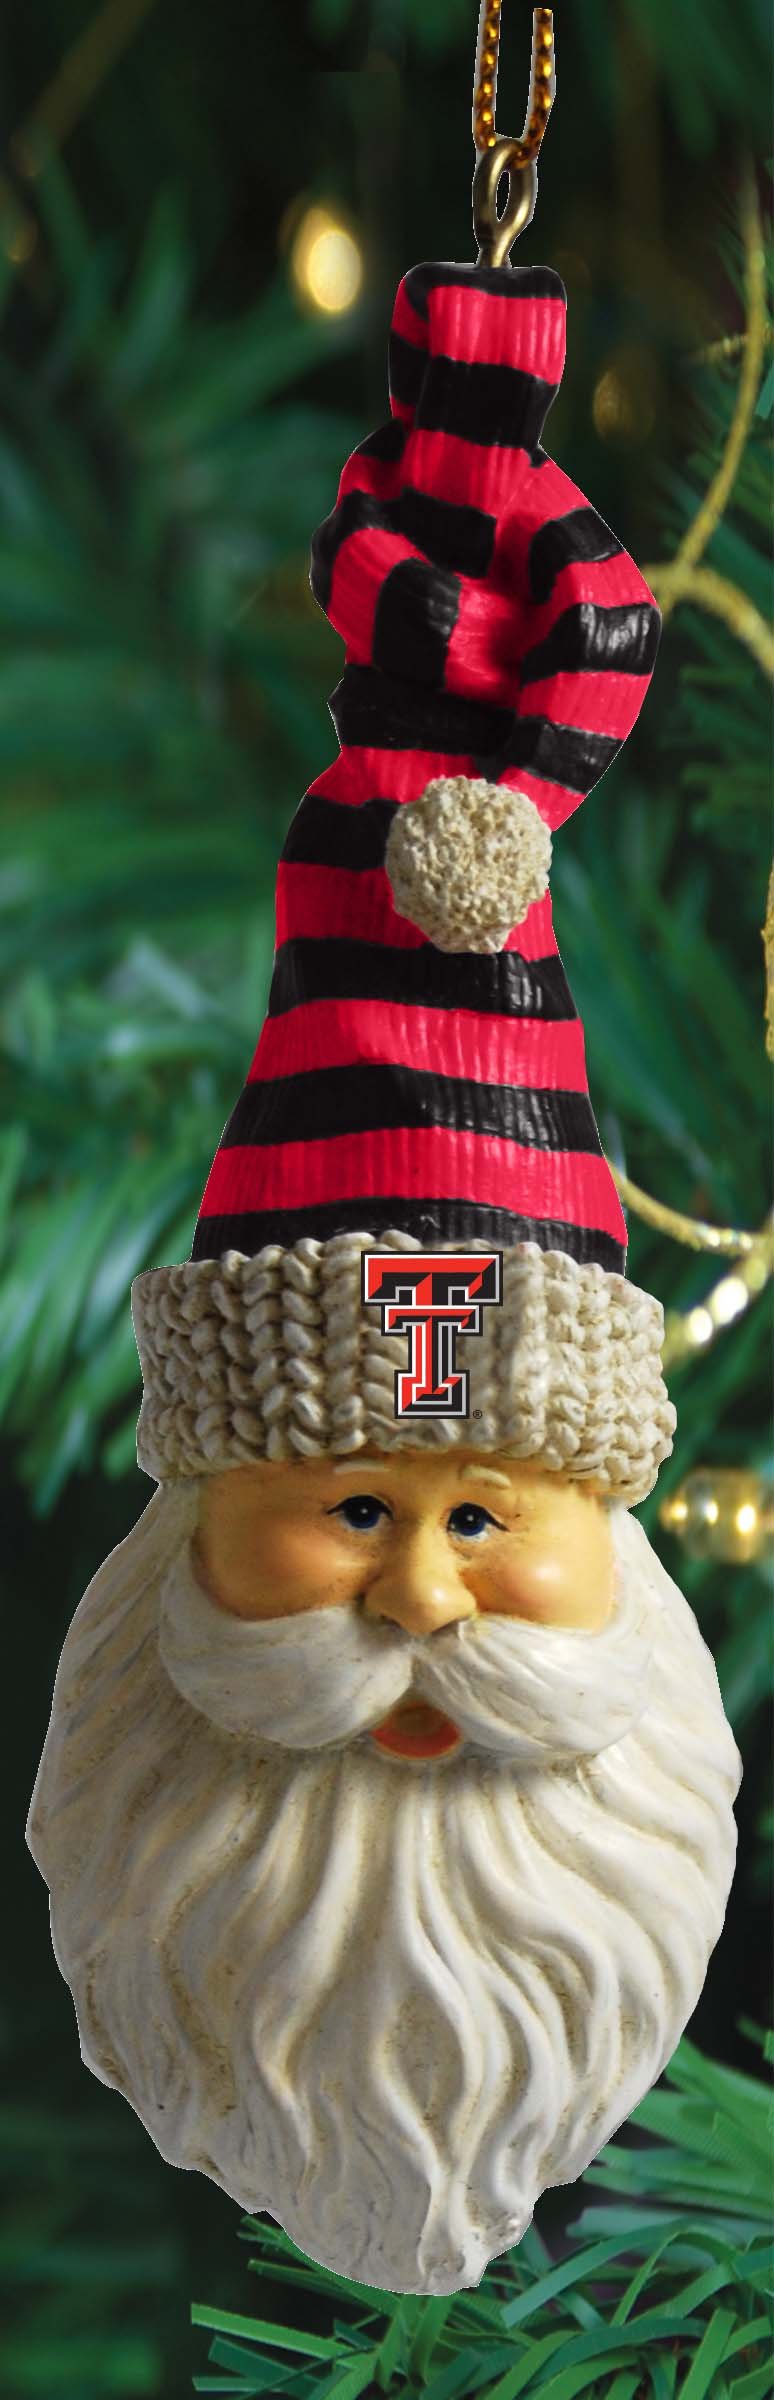 Snata Cap Ornament | Texas Tech University
COL, OldProduct, Ornament, Ornaments, Santa, Texas Tech Red Raiders, TXT
The Memory Company